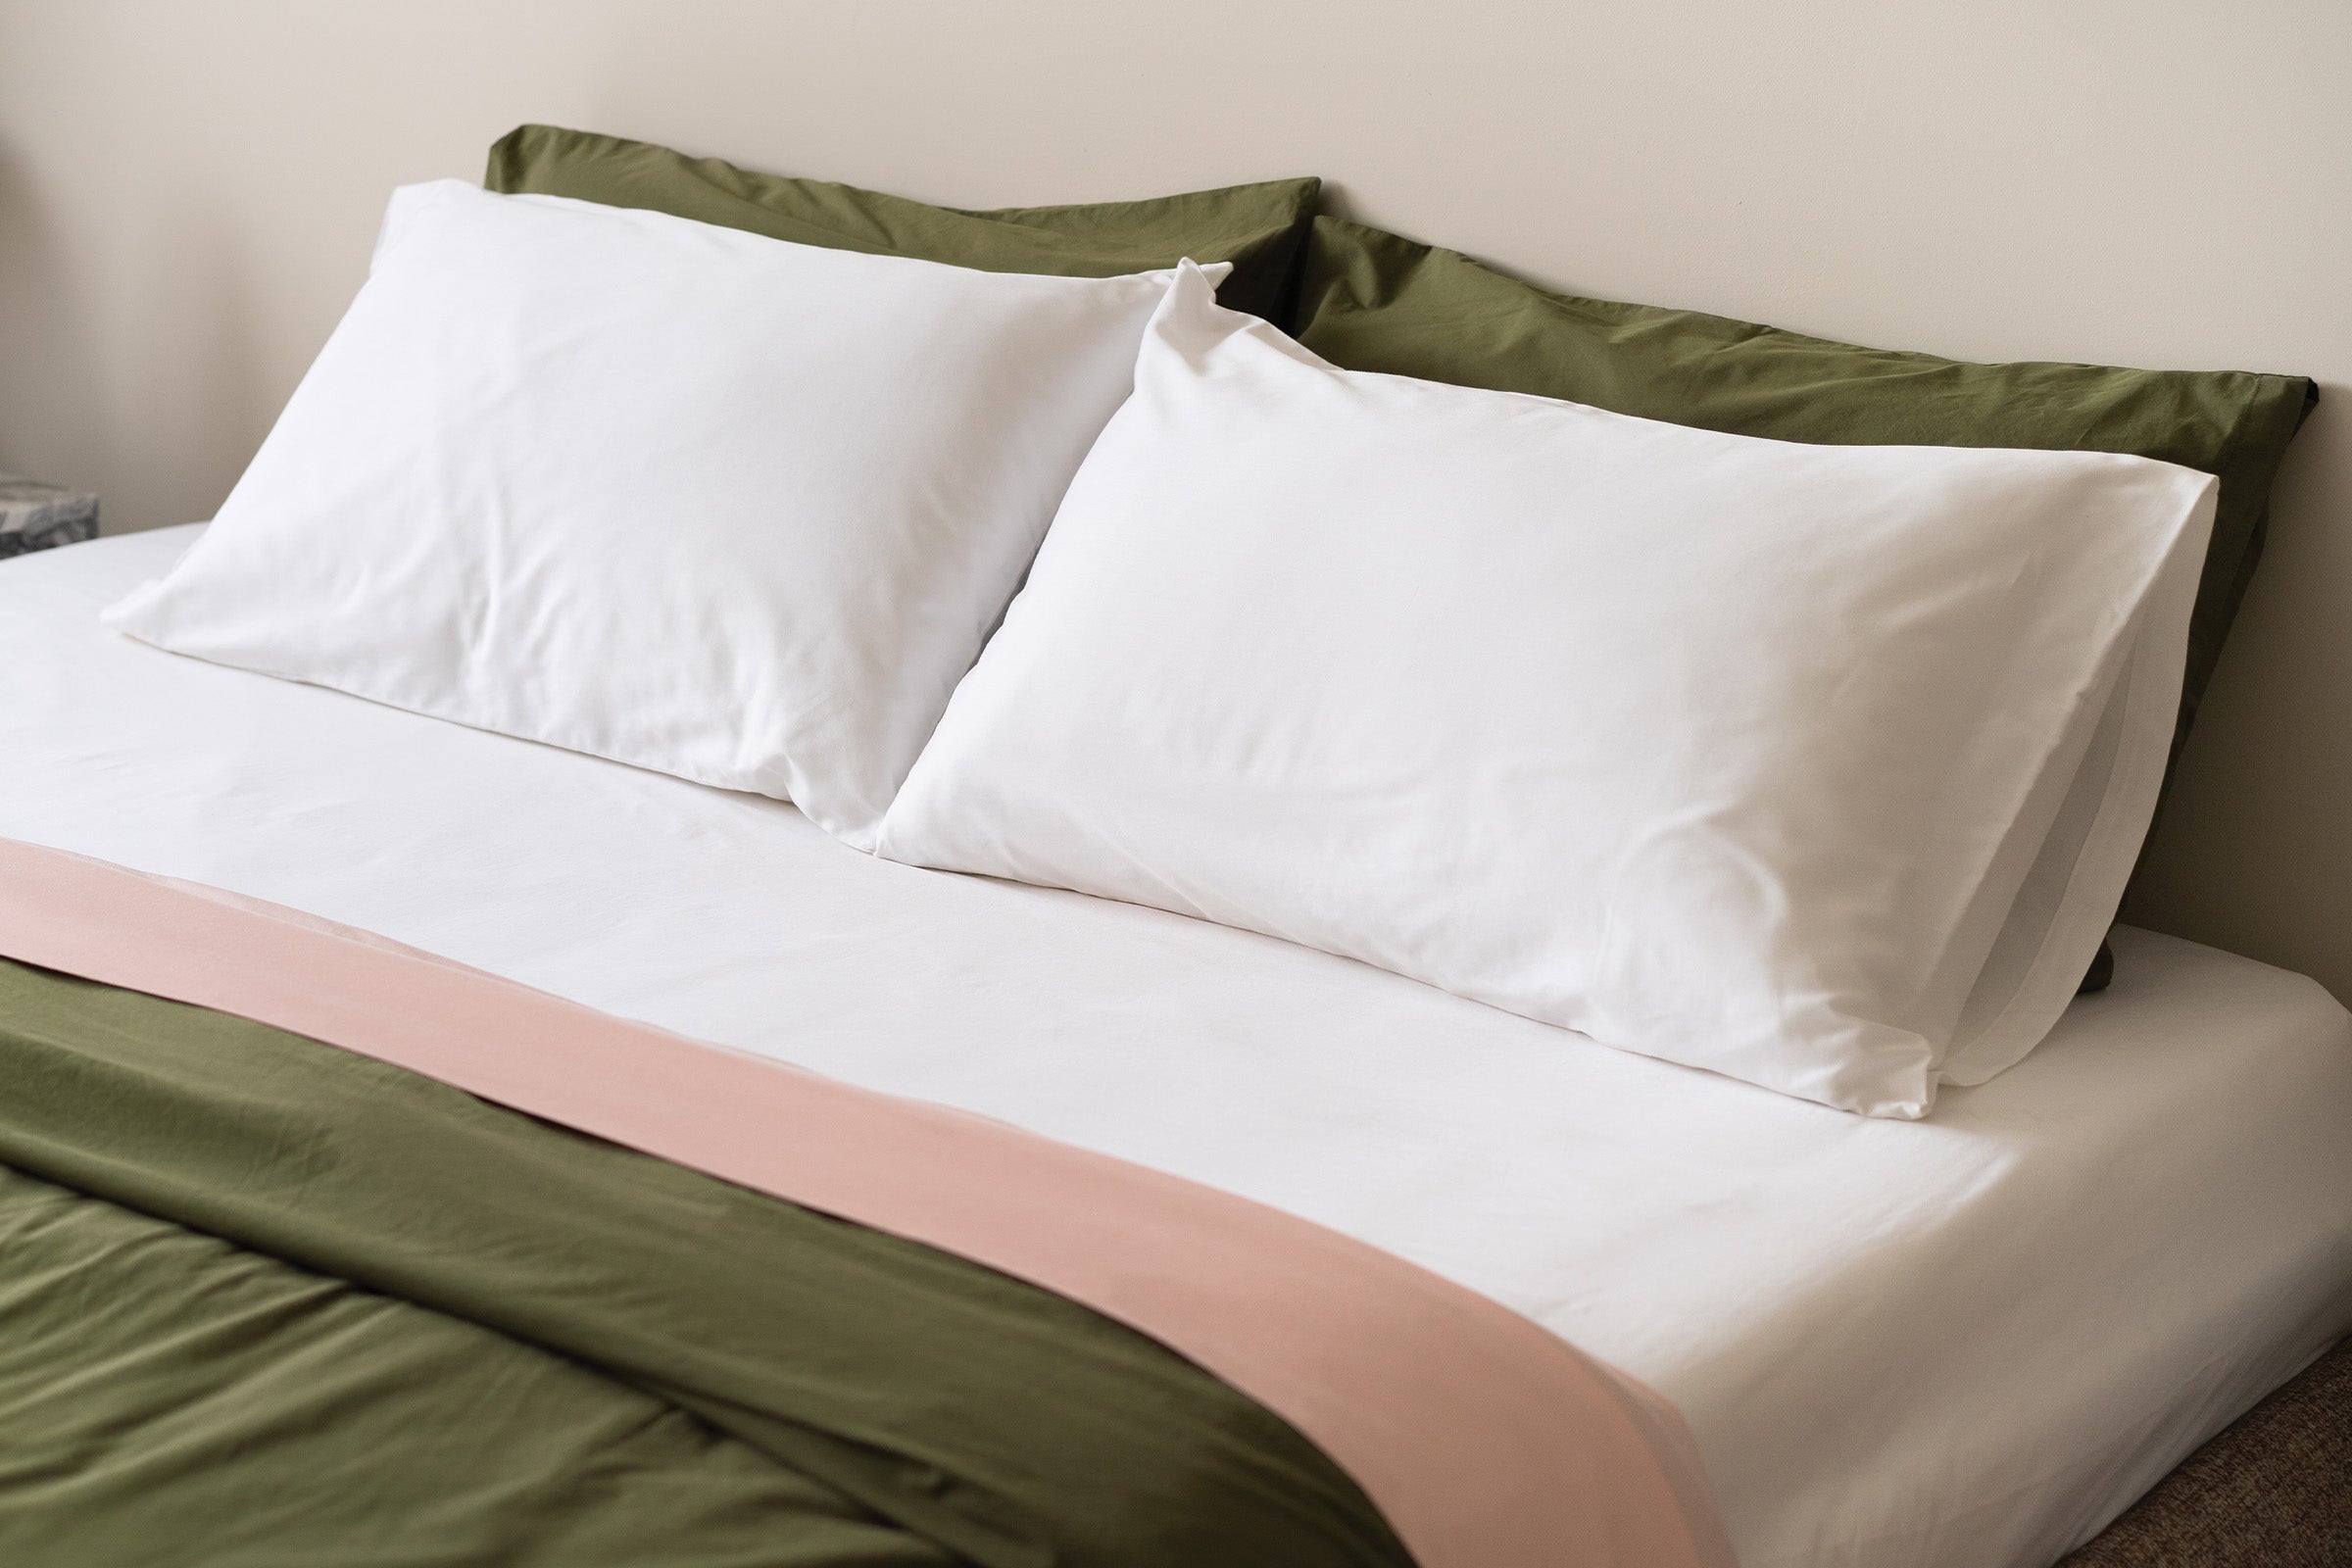 classic-white-fitted-sheet-pillowcase-pair-blush-flat-sheet-crisp-olive-duvet-cover-pillowcase-pair-by-sojao.jpg